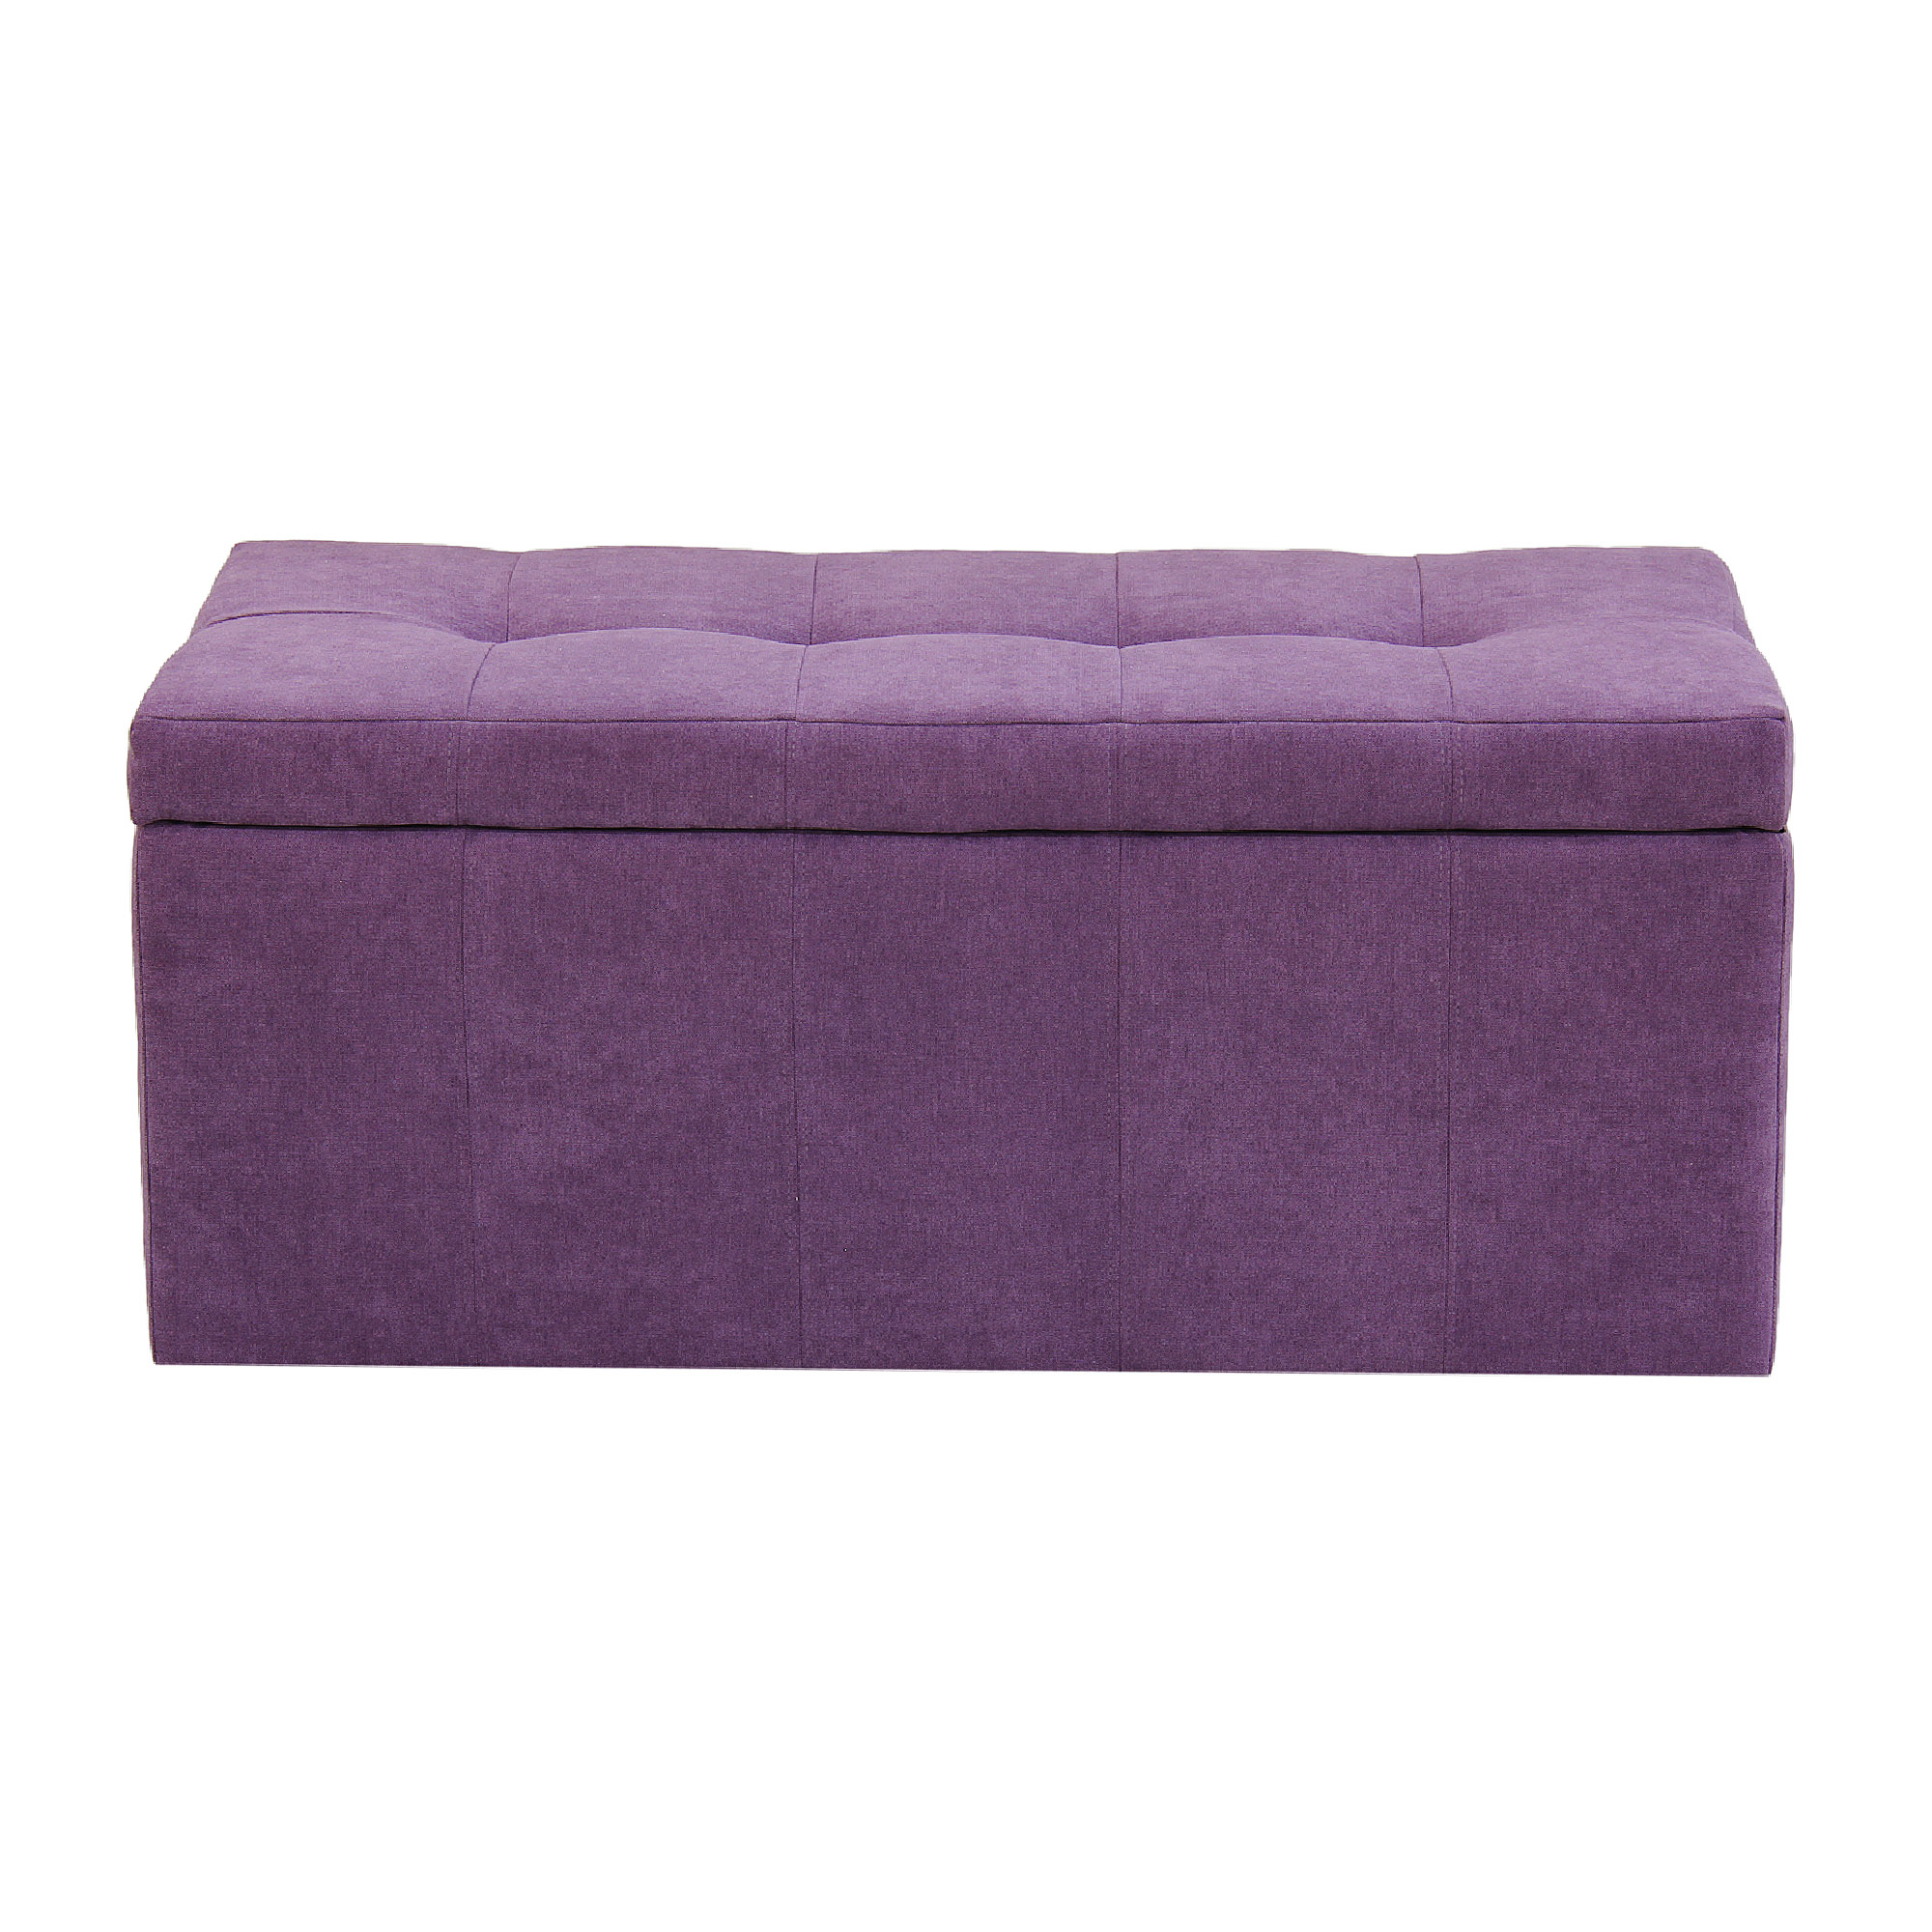 Банкетка Dreambag лонг фиолетовый велюр 100х46х46, размер 100х46х46 см - фото 2